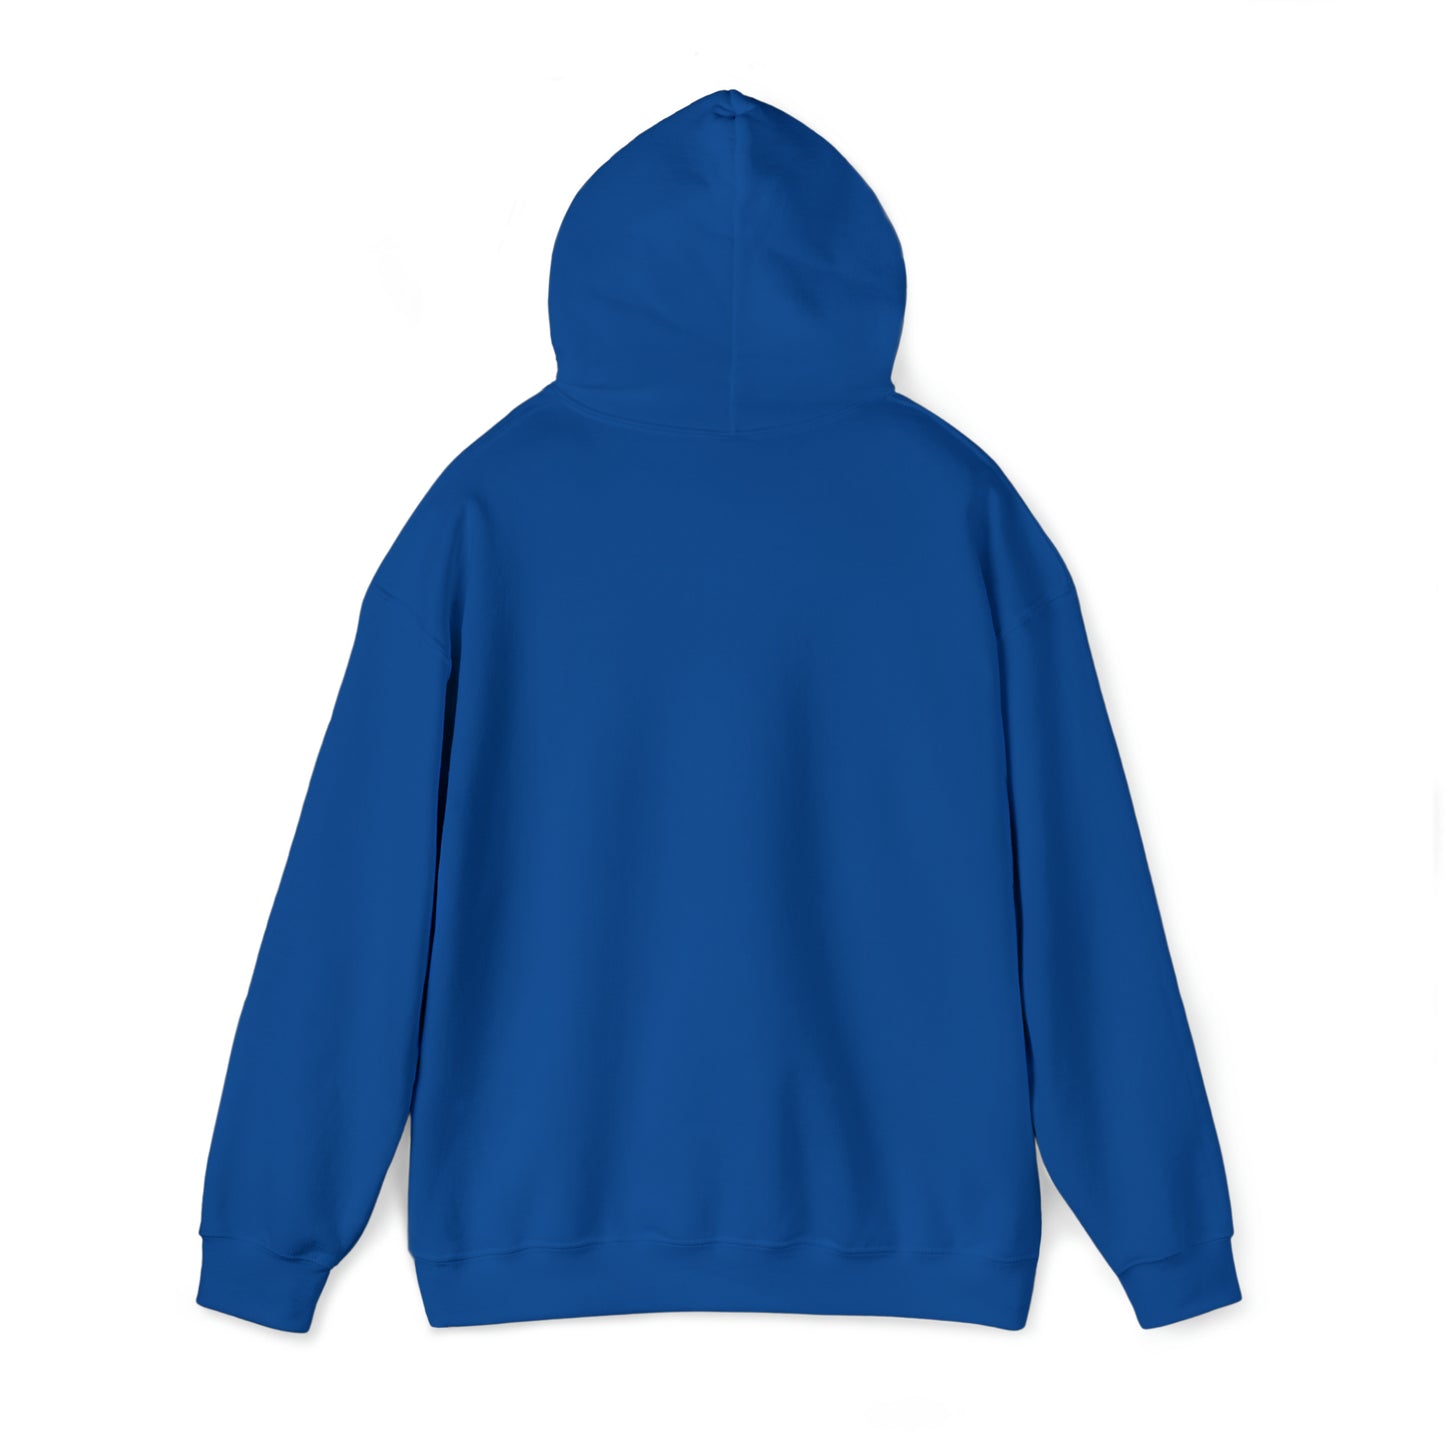 Saved Through Faith Unisex Heavy Blend™ Hooded Sweatshirt